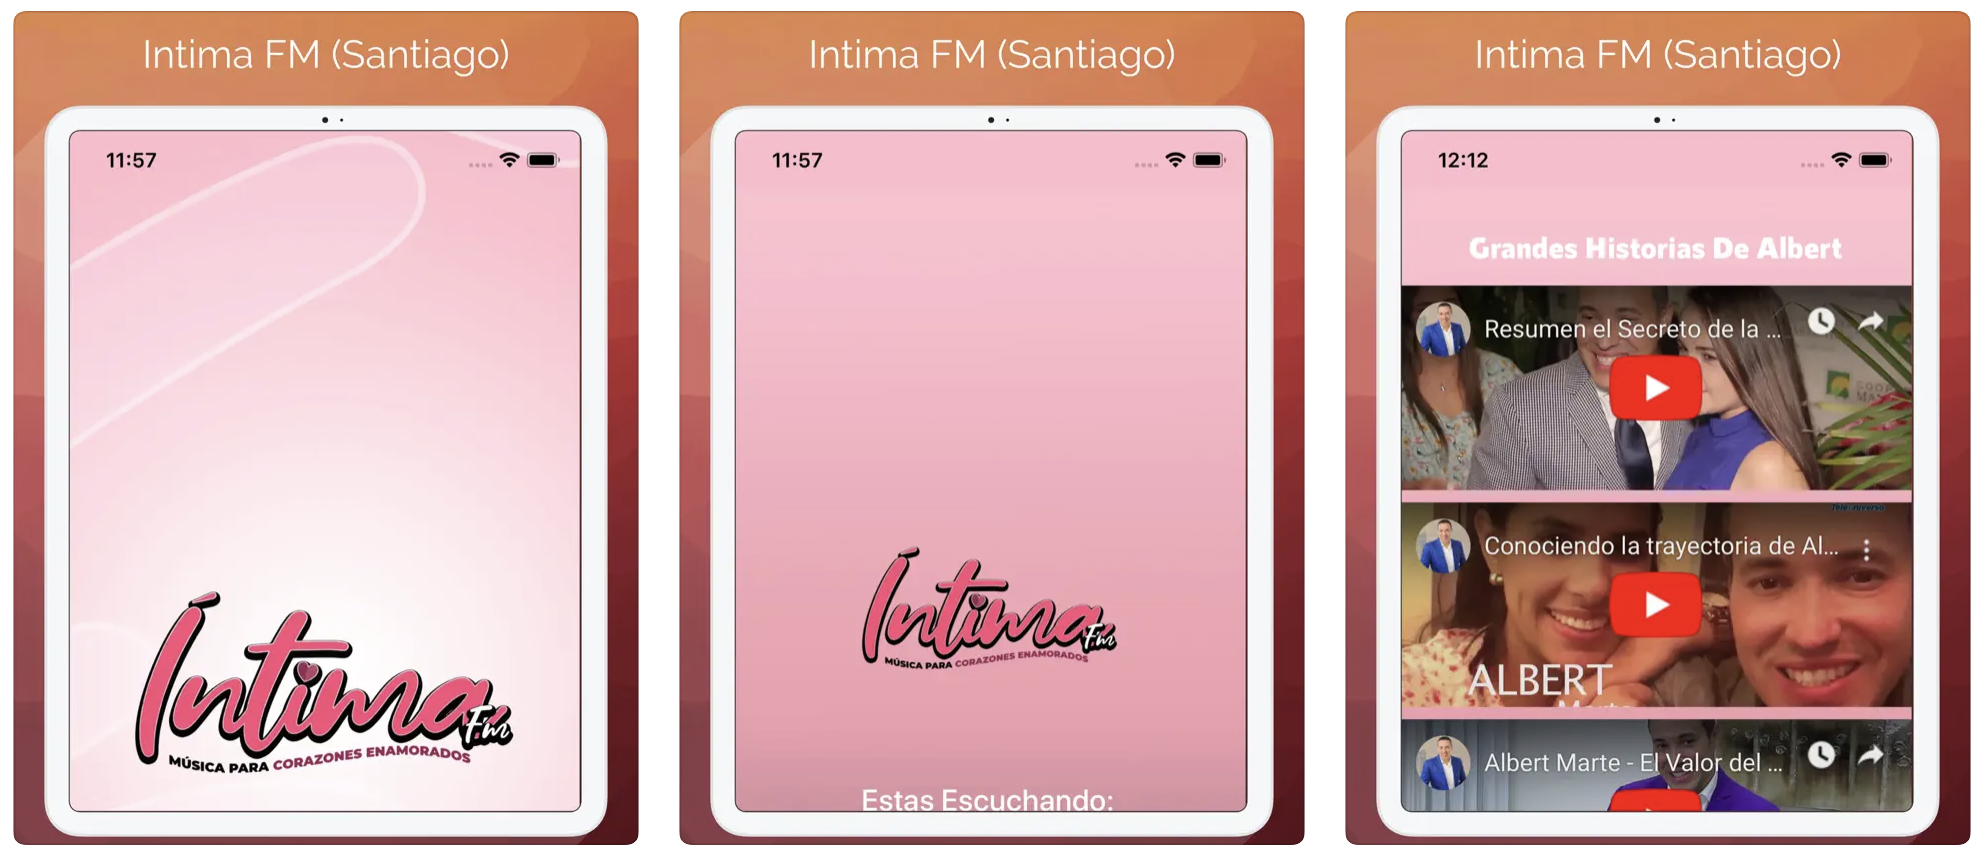 Intima FM (Santiago) Description